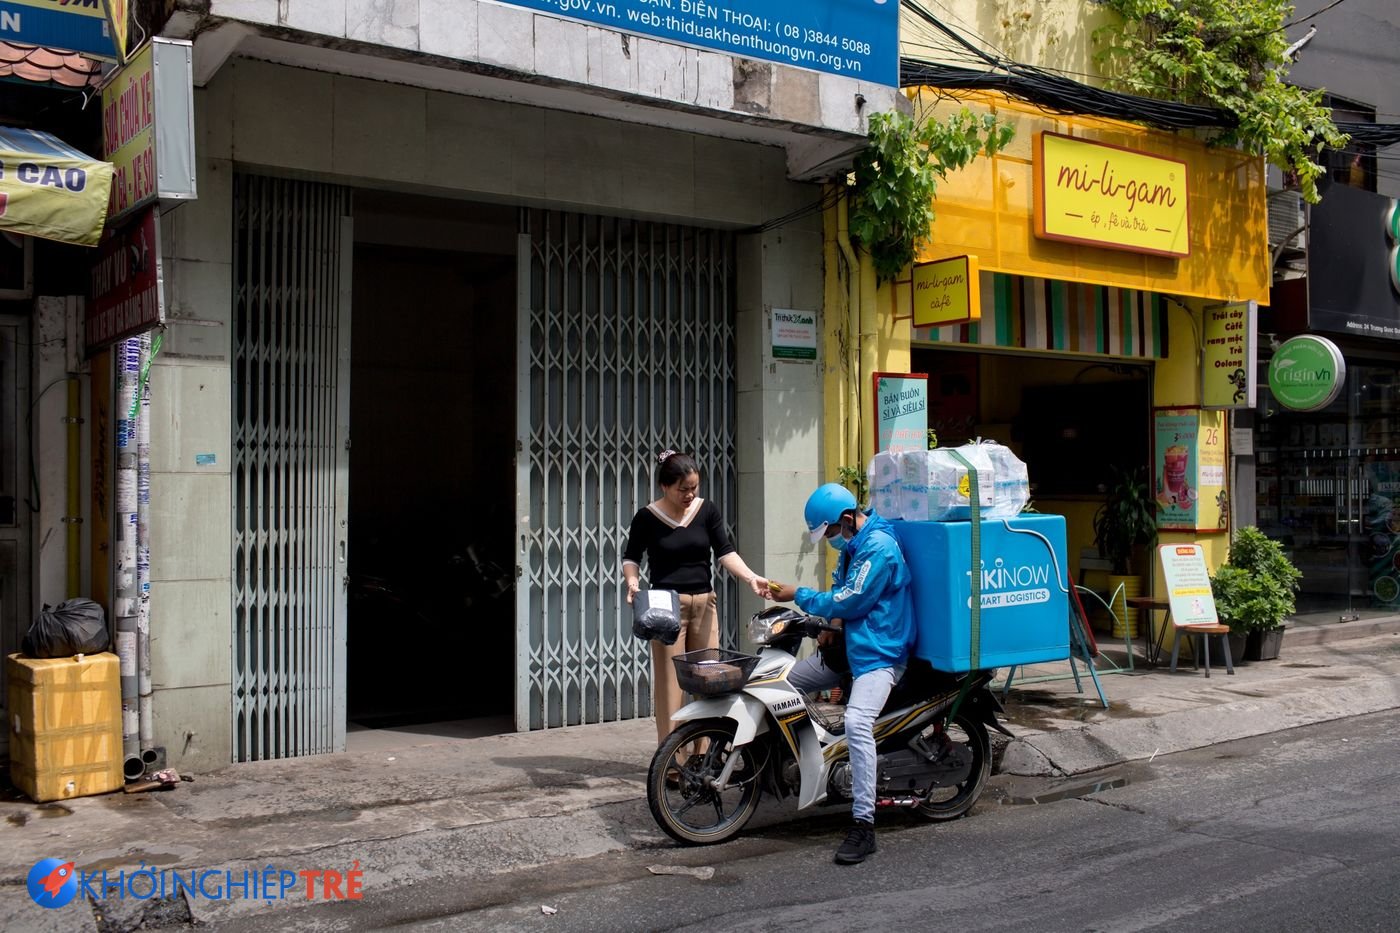 Nền kinh tế số Việt hấp dẫn 